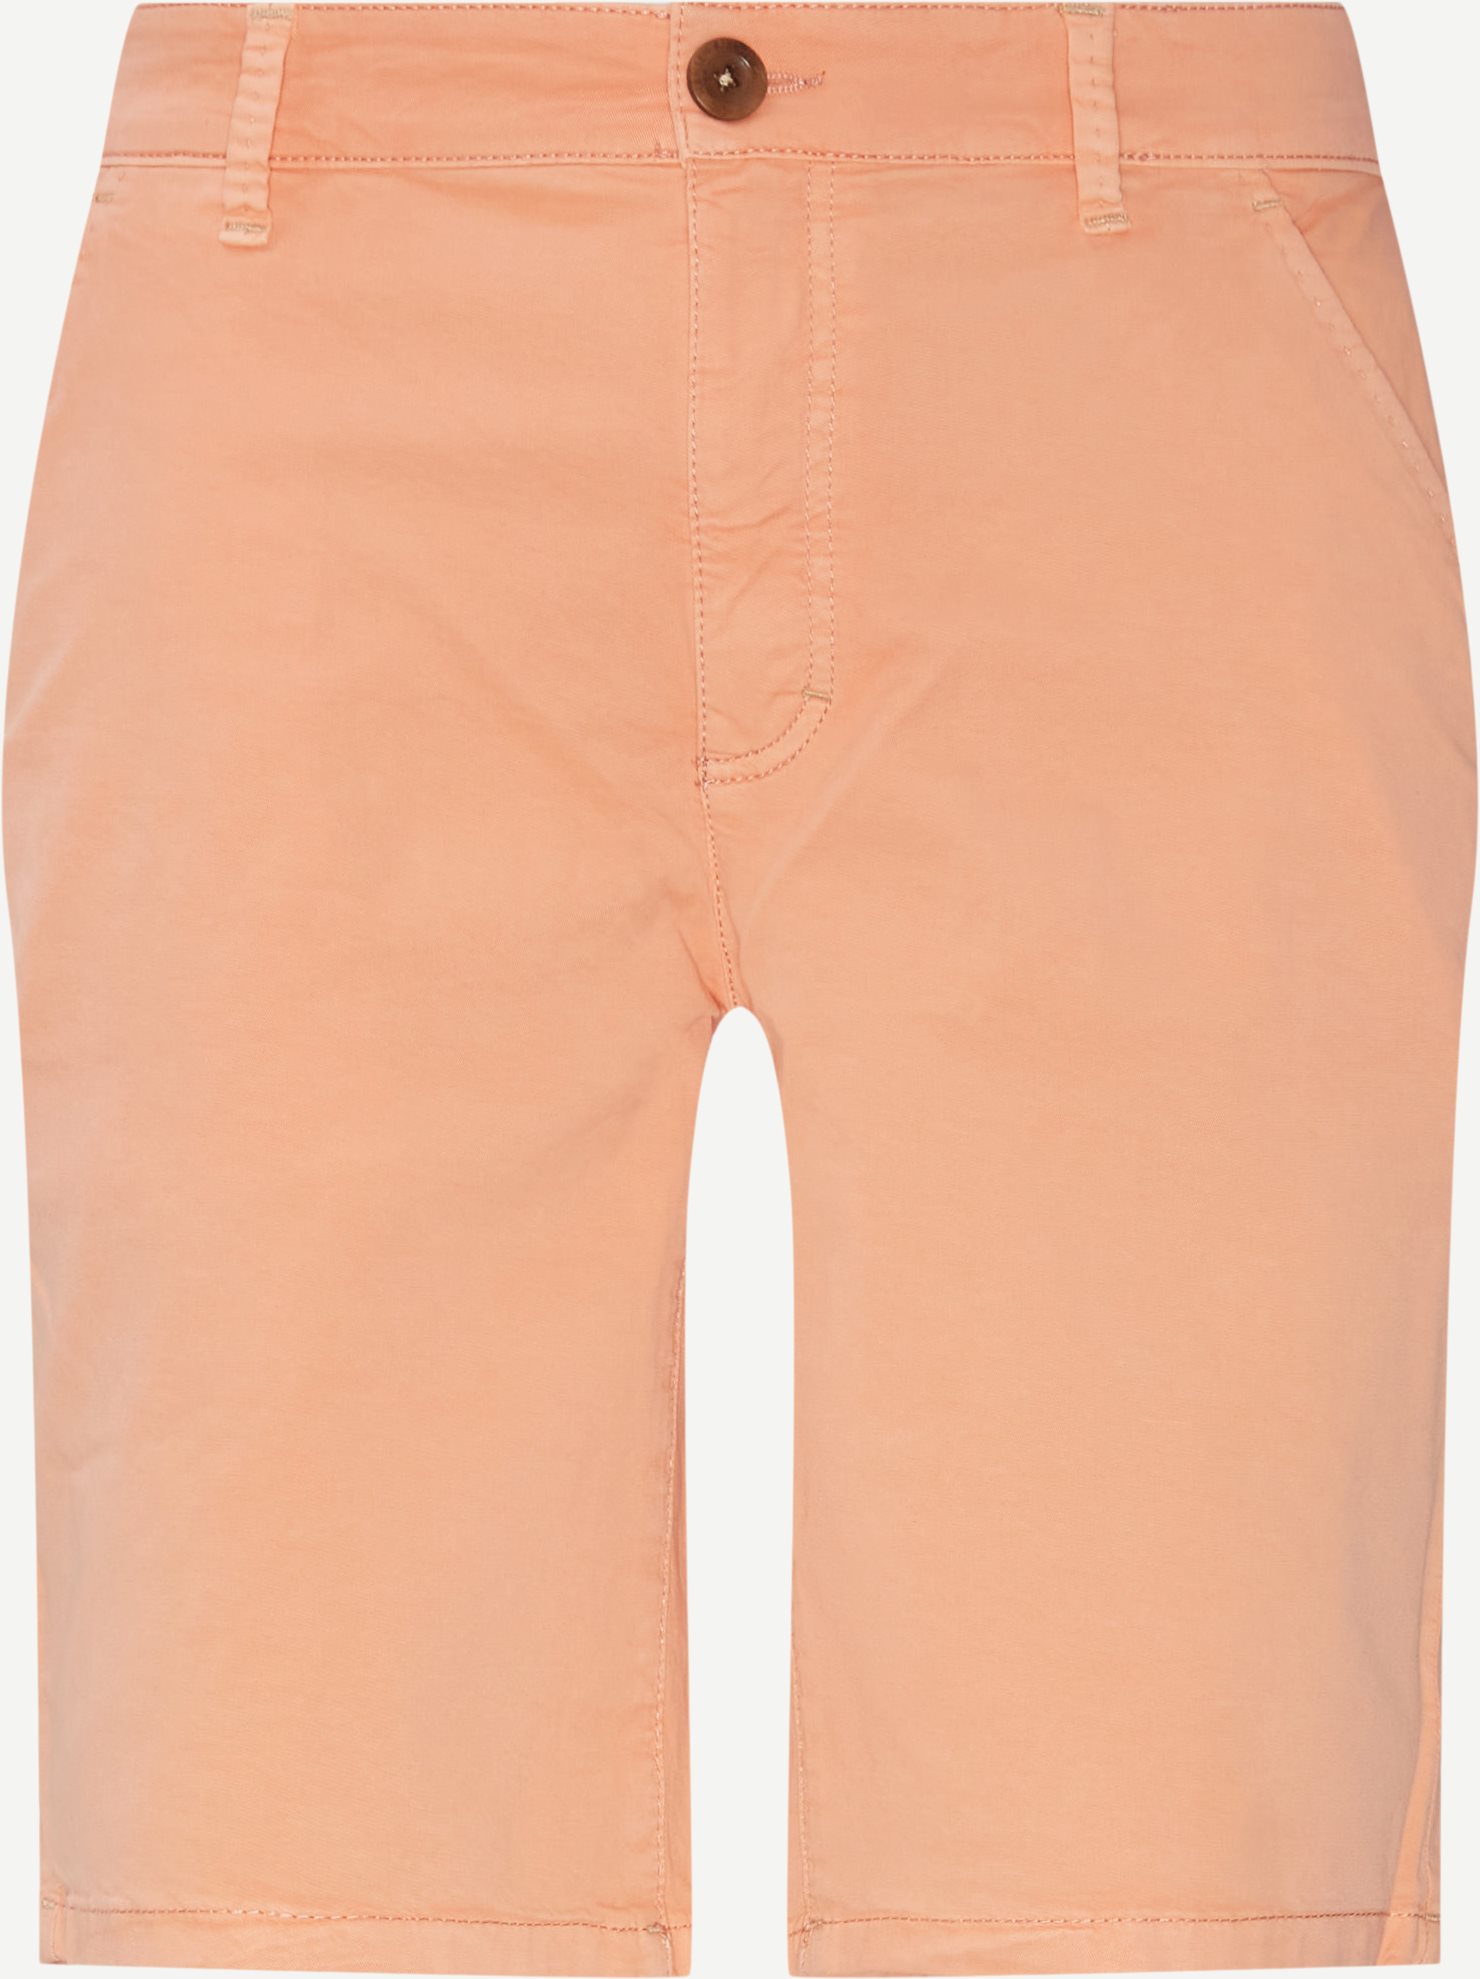 11030 Classic Chino Shorts - Shorts - Regular fit - Orange